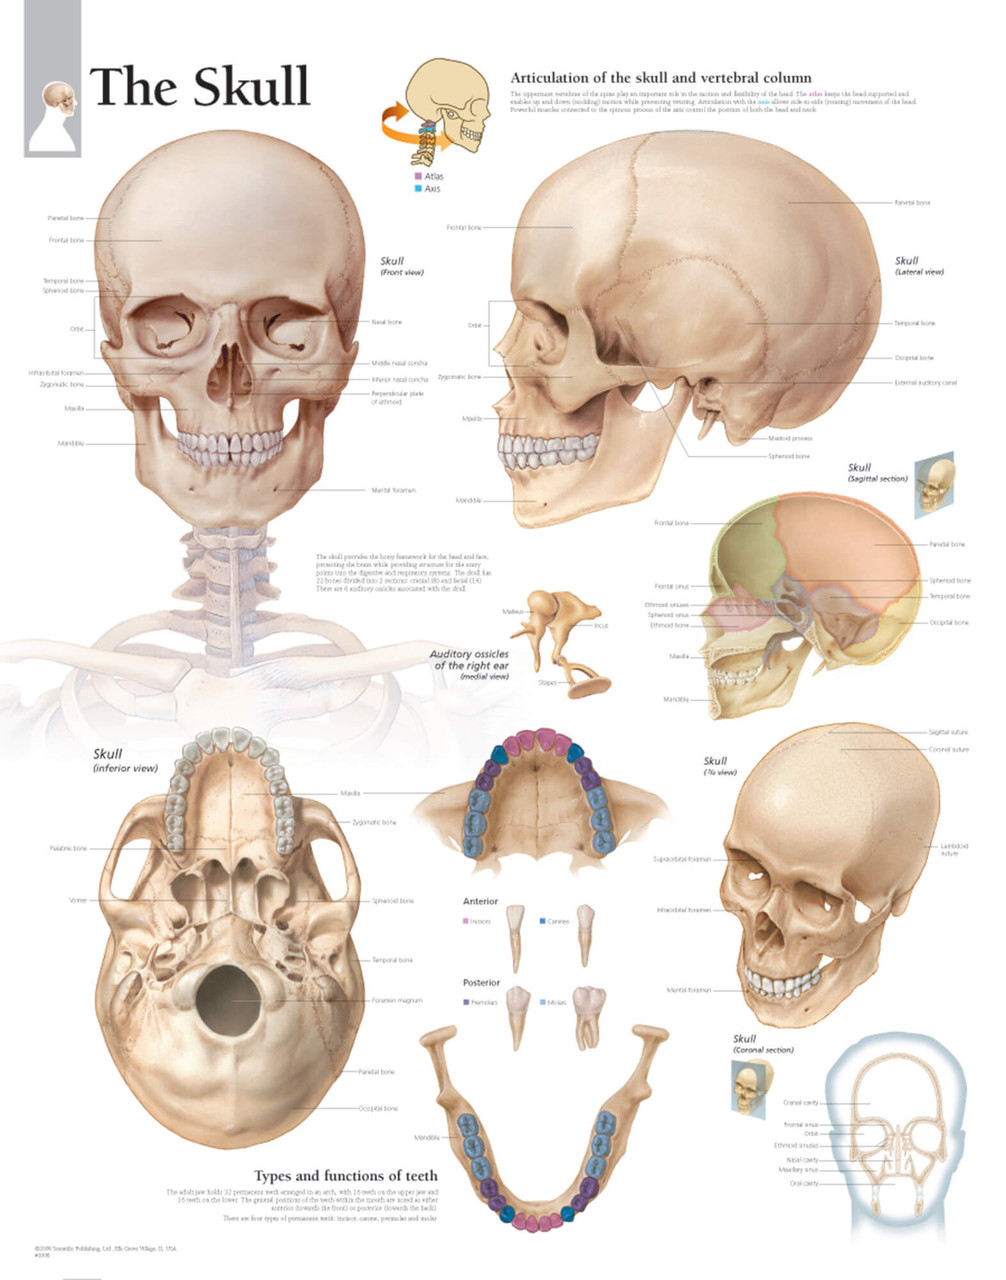 Bones of the Skull Anatomy - Jacksonville Orthopaedic Institute